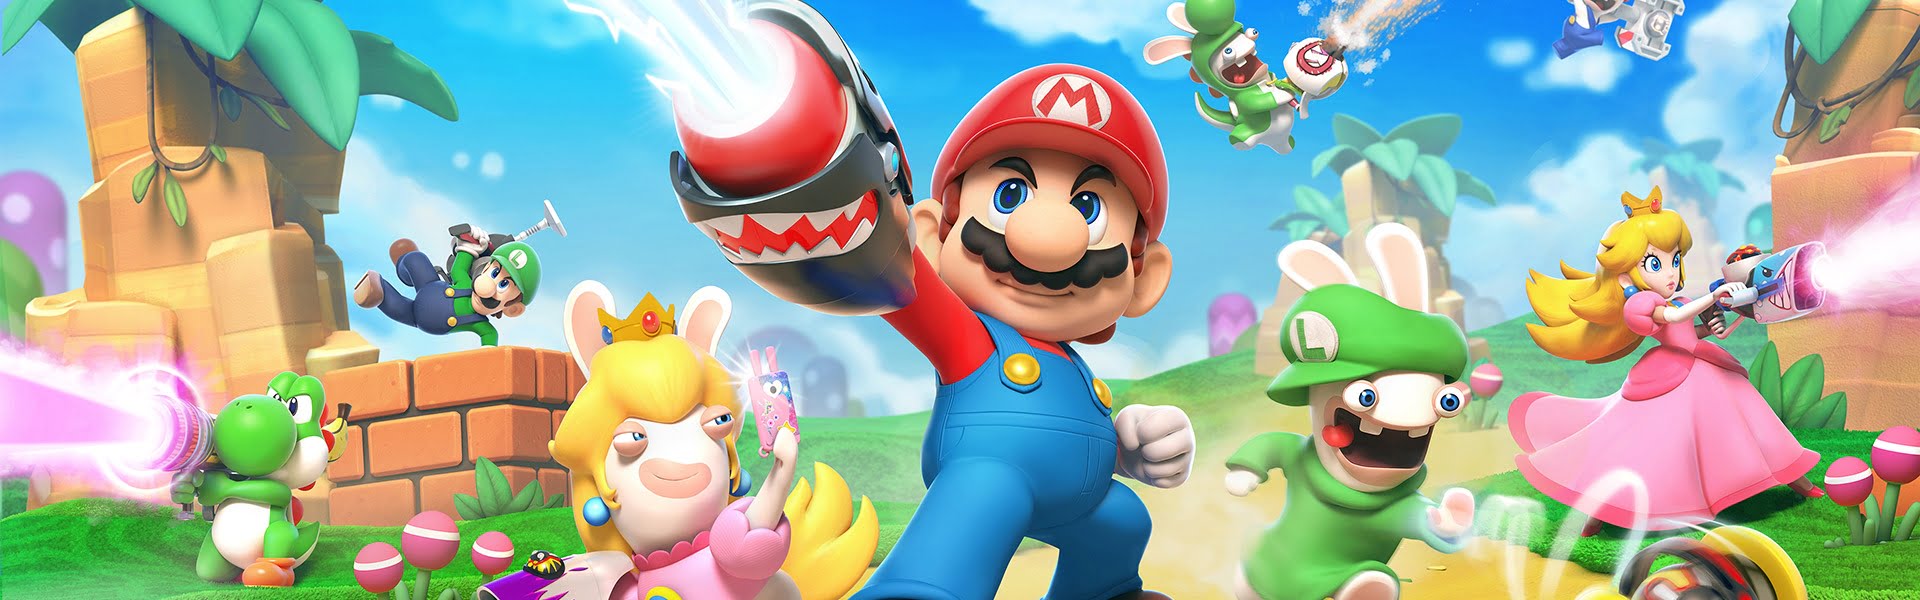 Mario + Rabbids Kingdom Battle Review 14